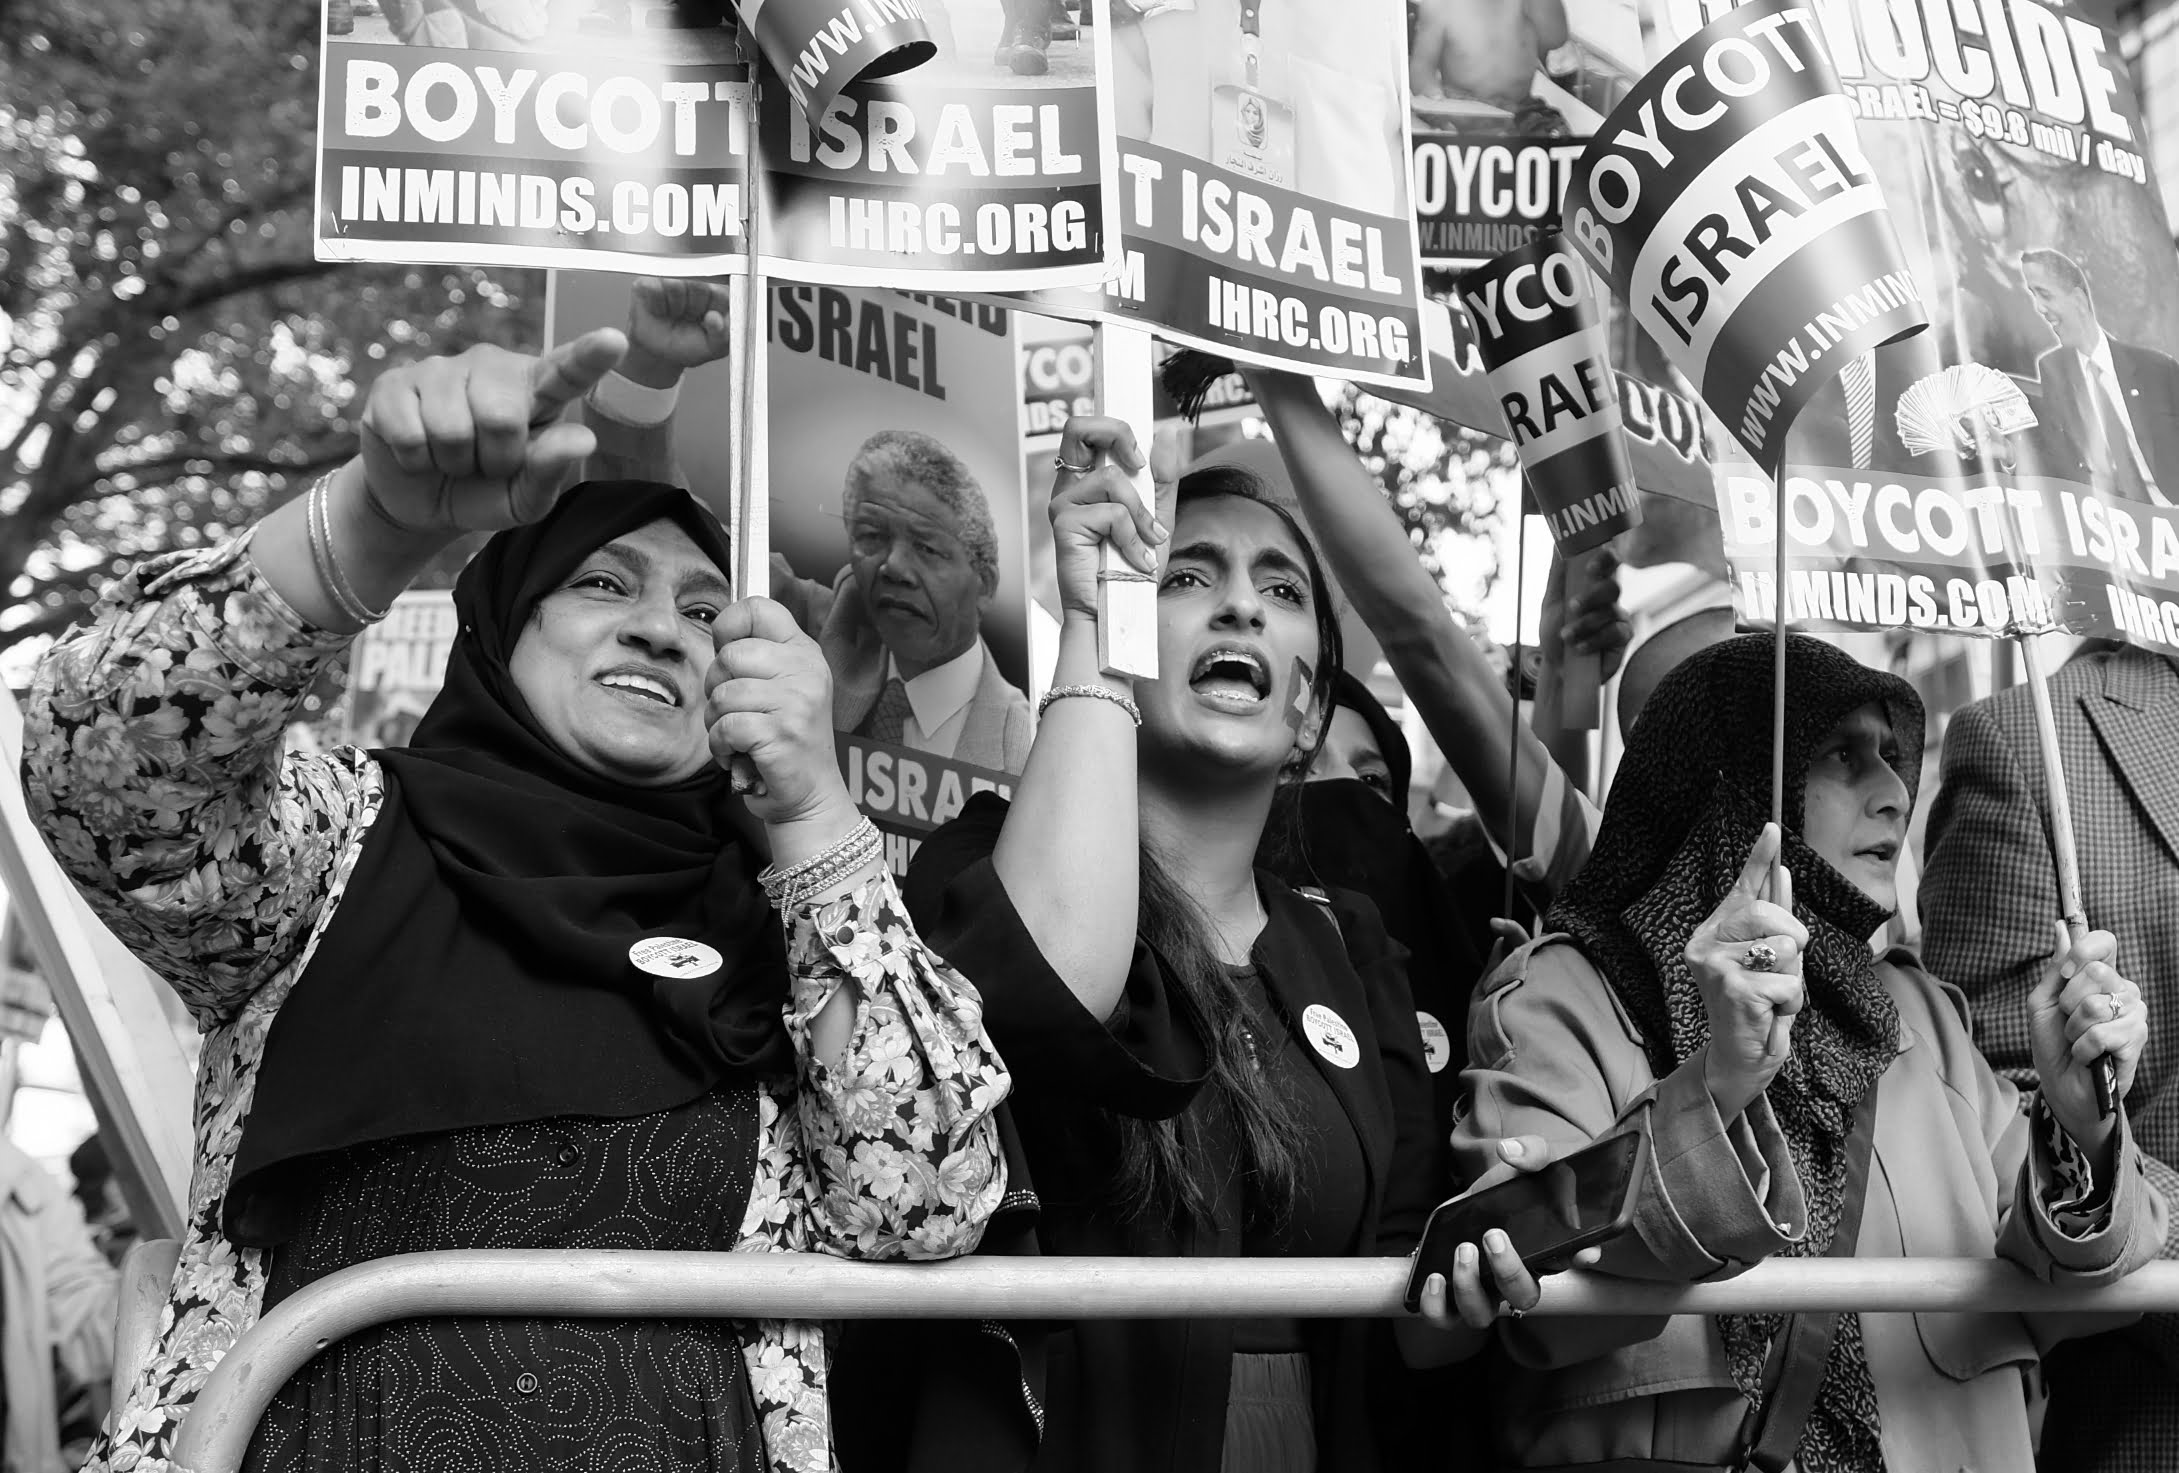 Boycott_Israel